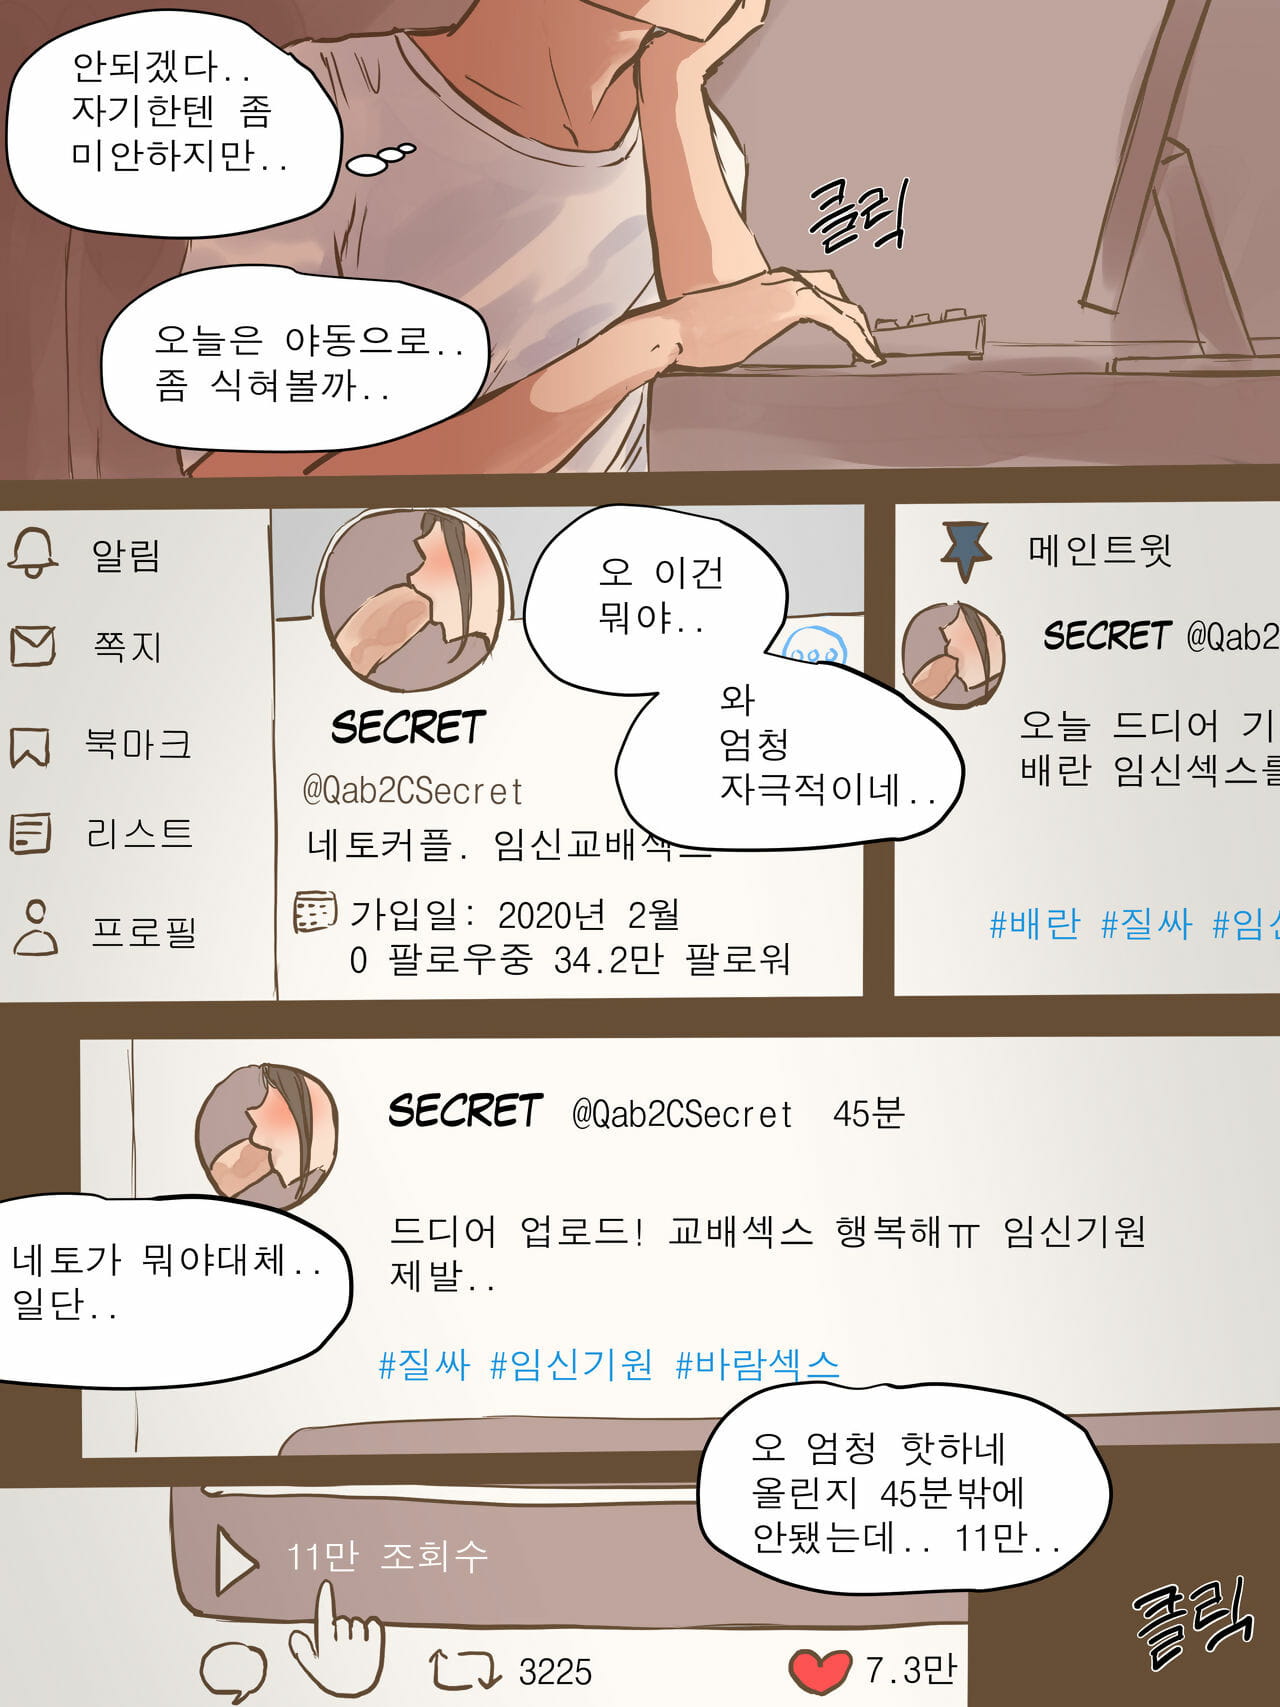 laliberte SECRET Korean - part 2